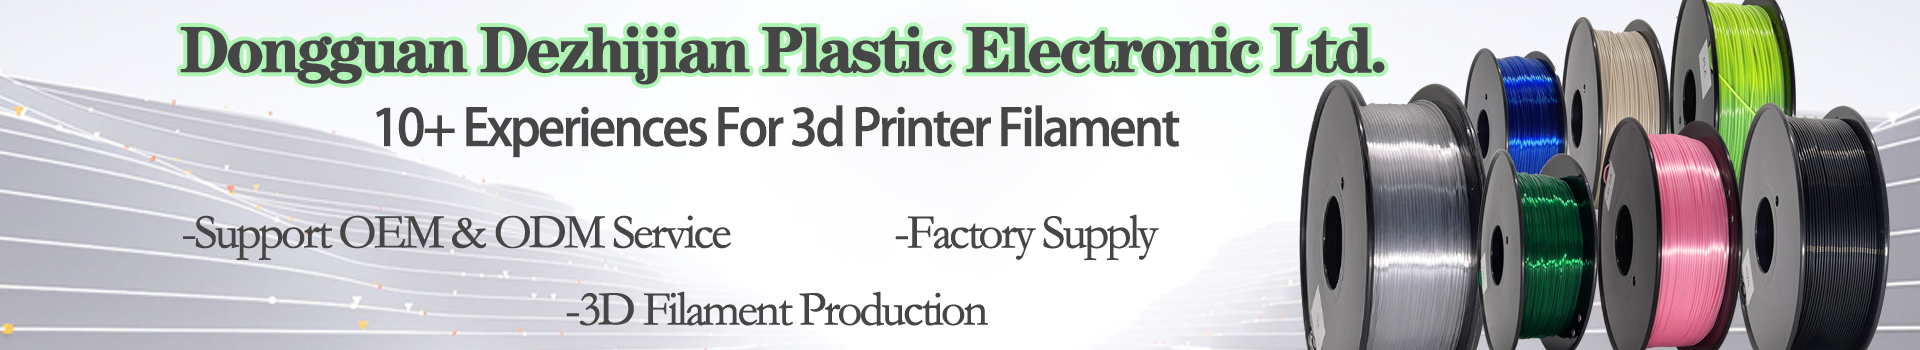 Filamento de filamento PLA Filamento de triple color, 175 mm 3D Filament, Filamento de impresora 3D